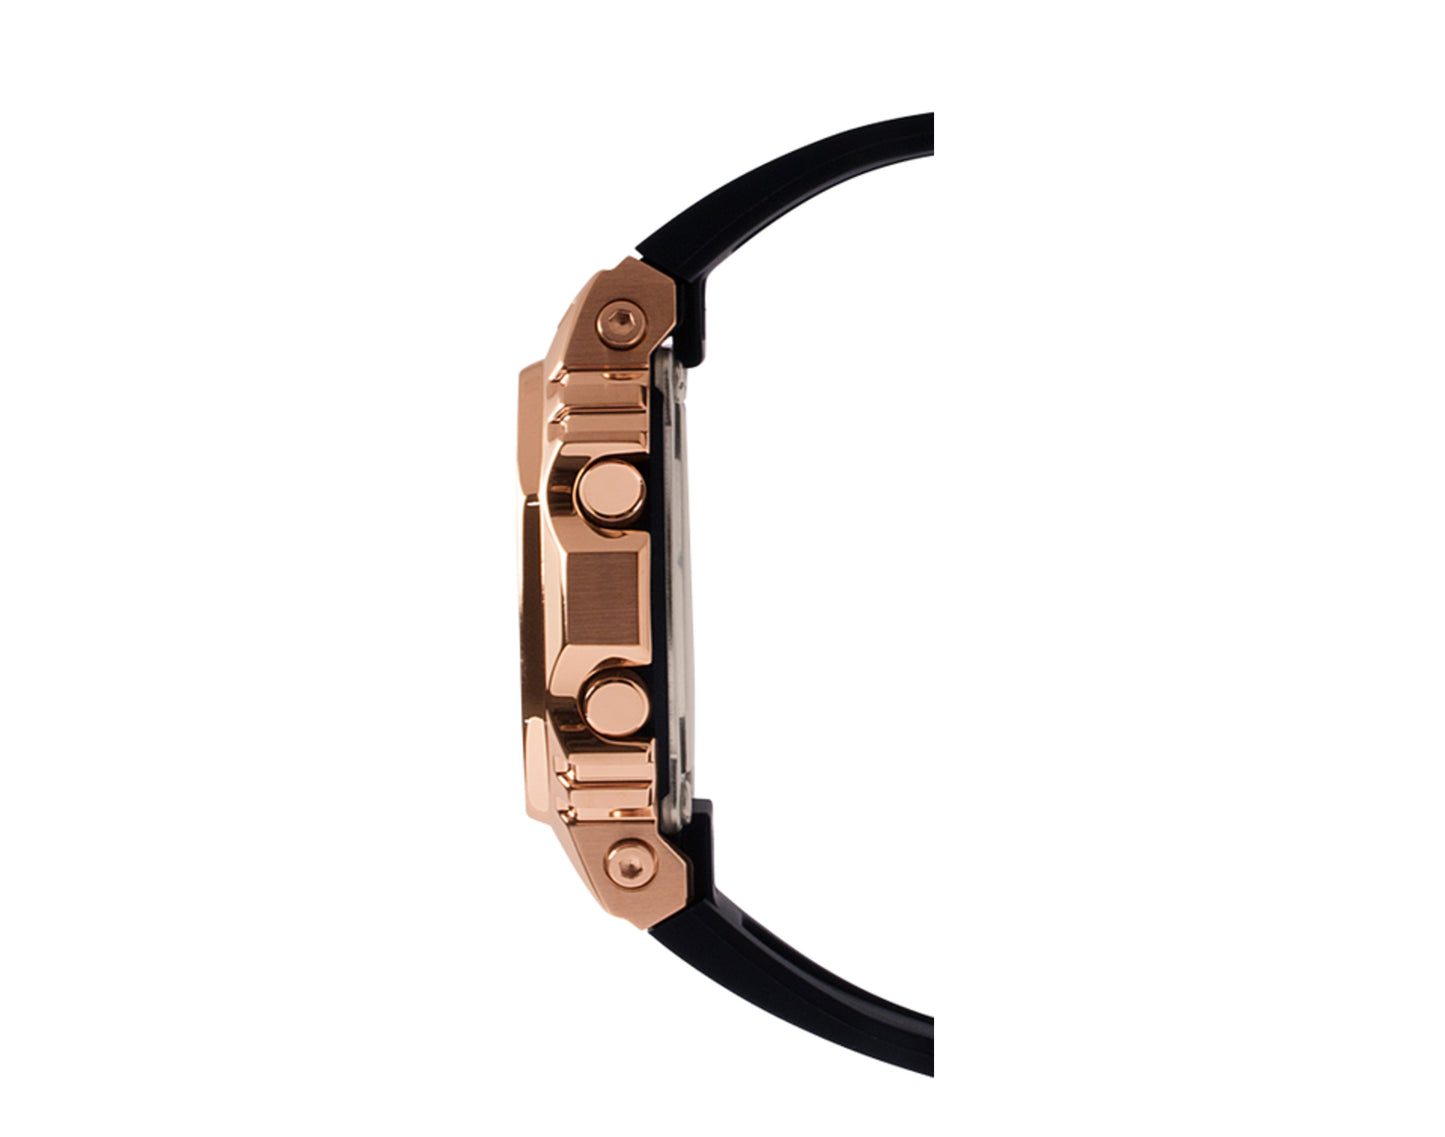 Casio G-Shock GMS5600 Digital Metal and Resin Women's Watch